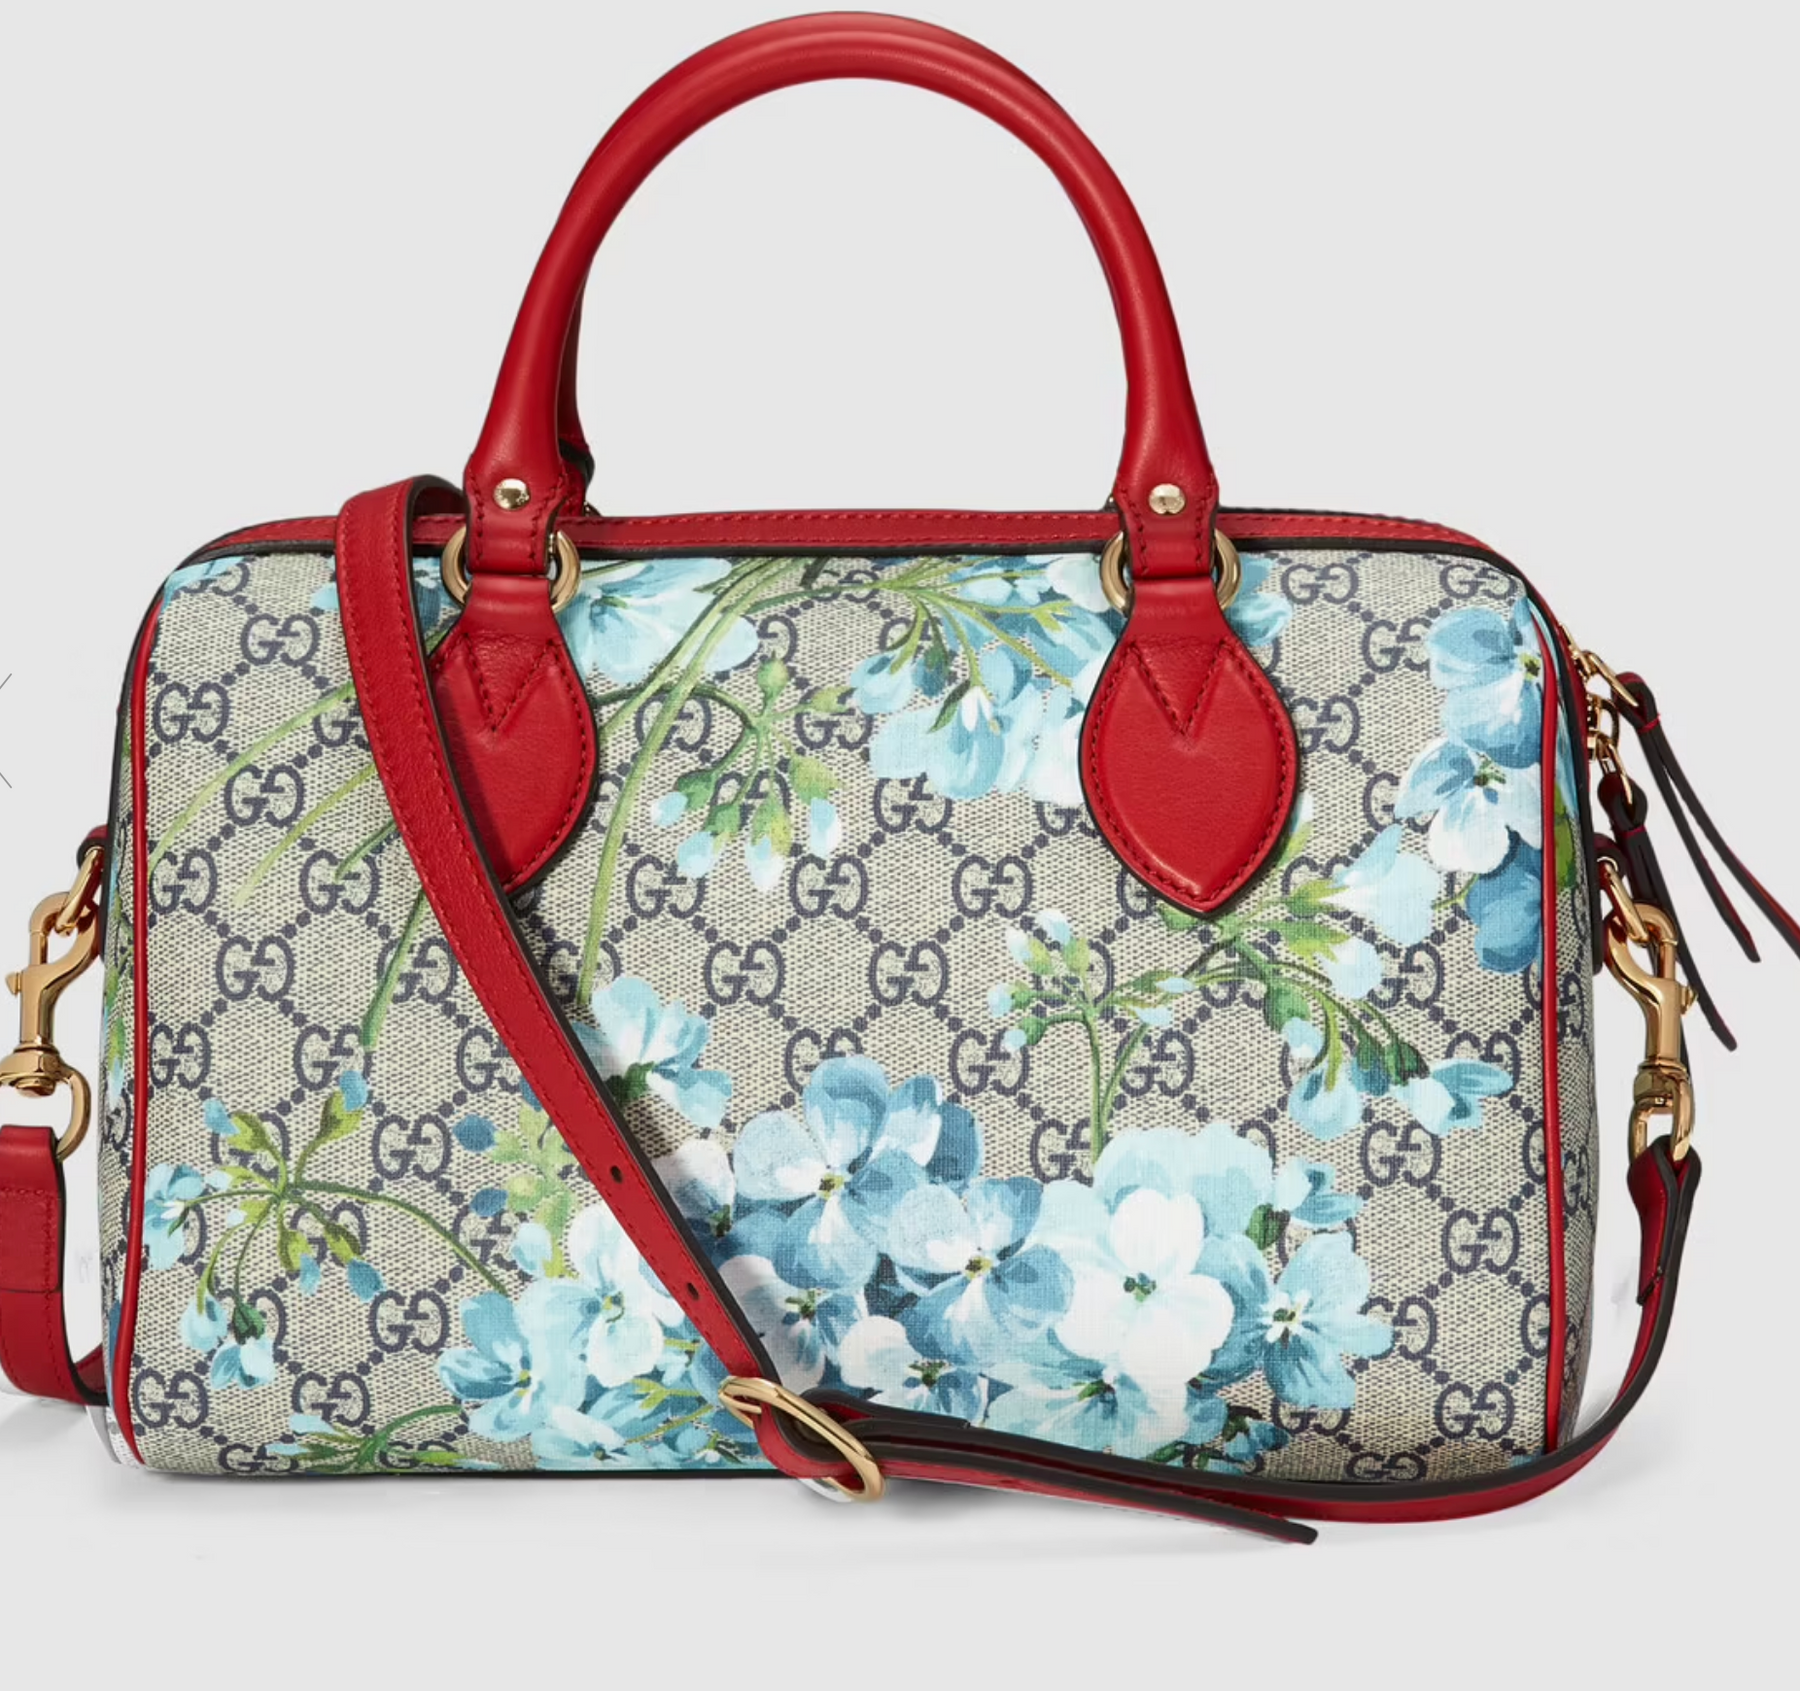 Gucci GG Supreme Bloom Butterfly Embroidered Boston Bag, Gucci Handbags